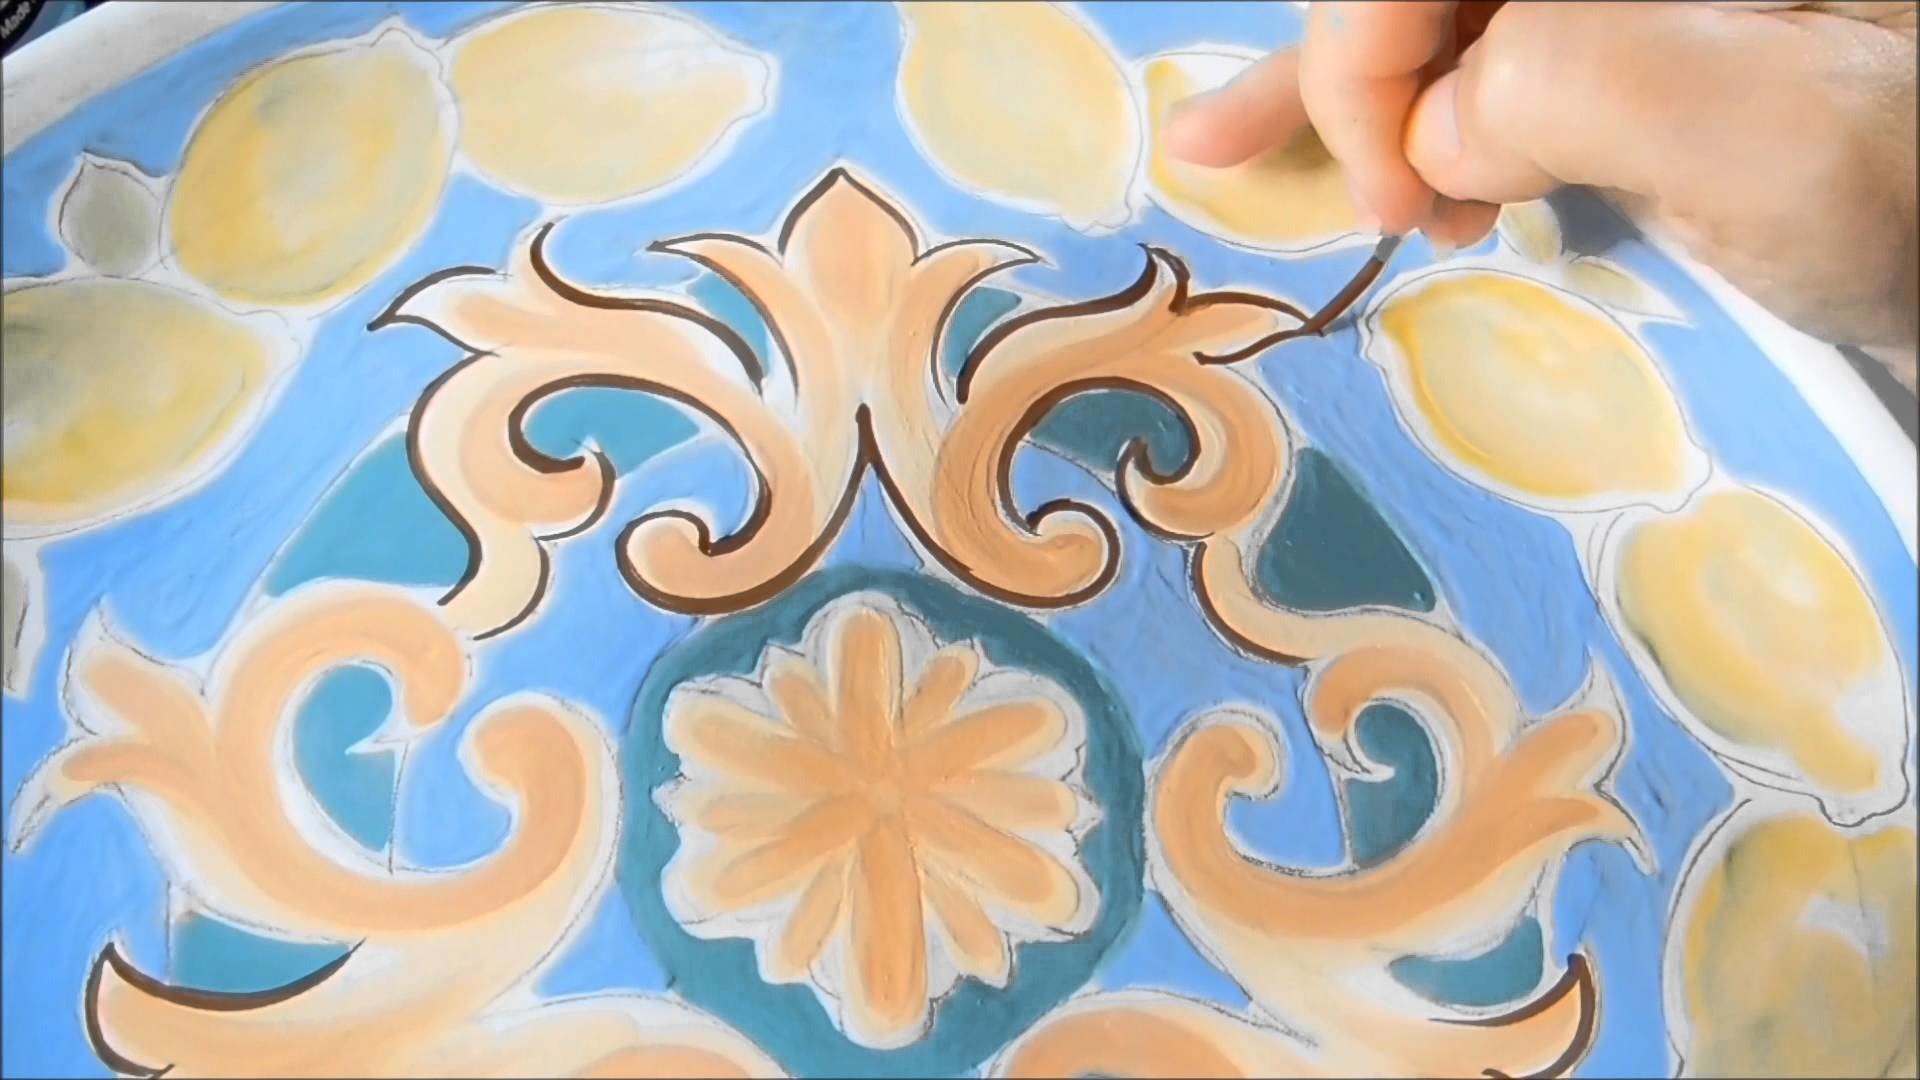 Pintura em cerâmica - Pottery painting - Ceramic Decoration: valeriato@hotmail.com